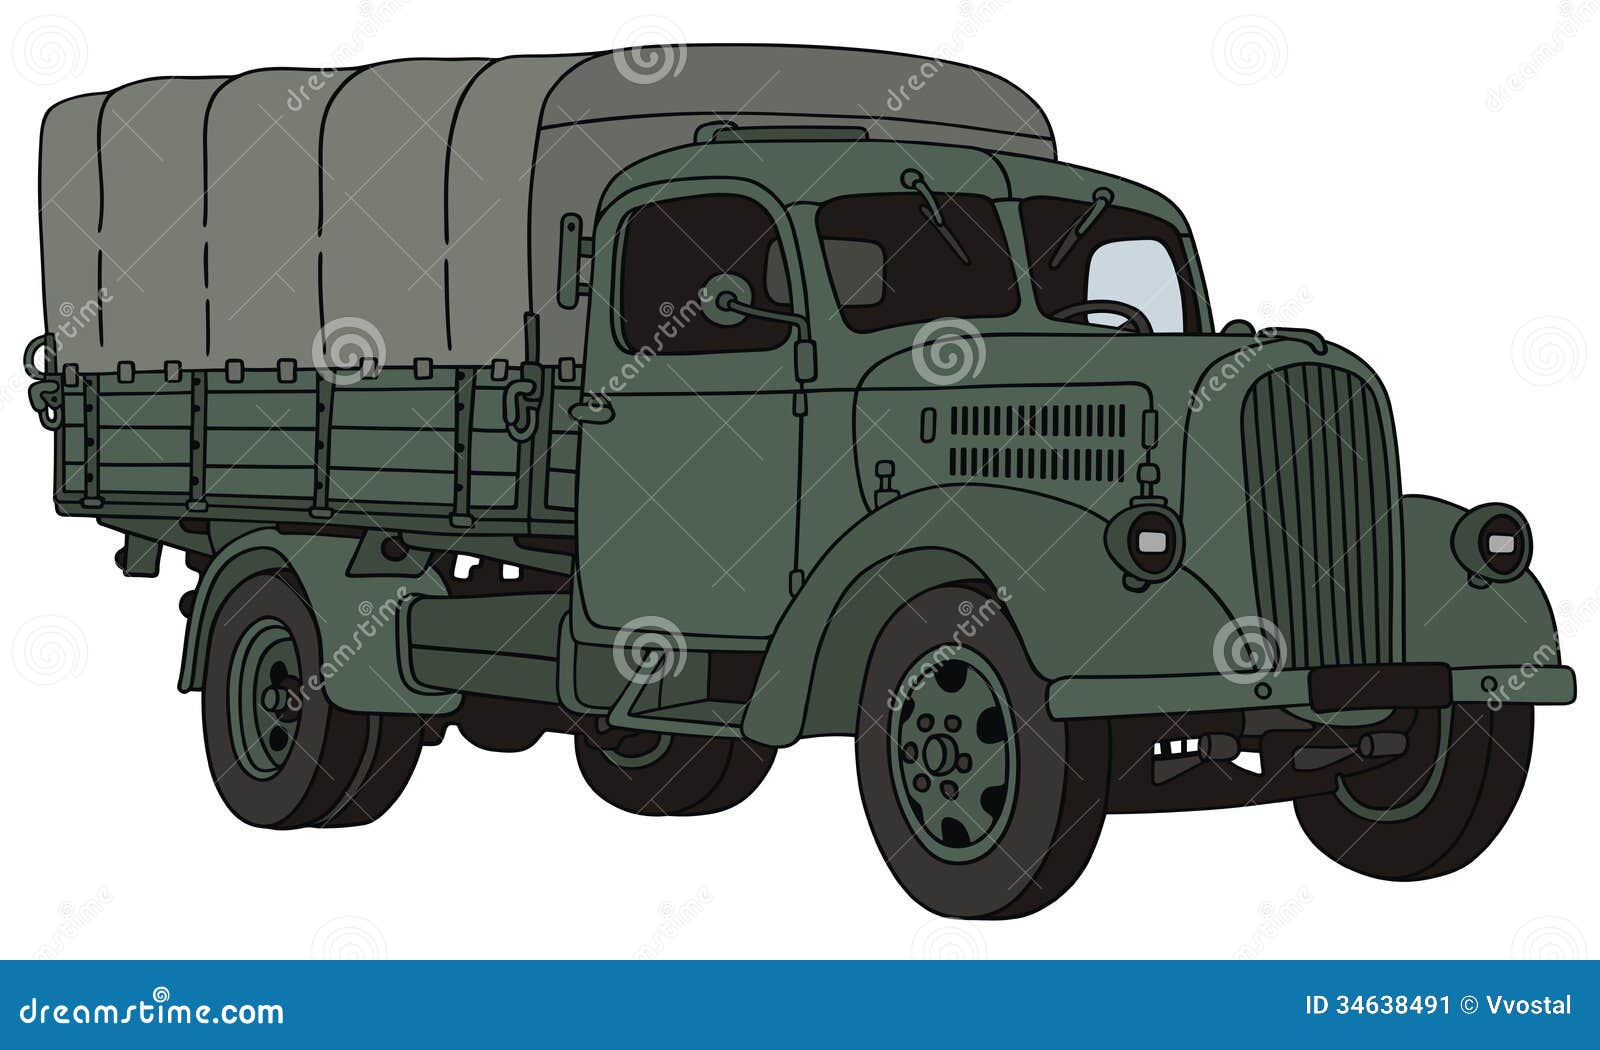 military truck clip art - photo #21